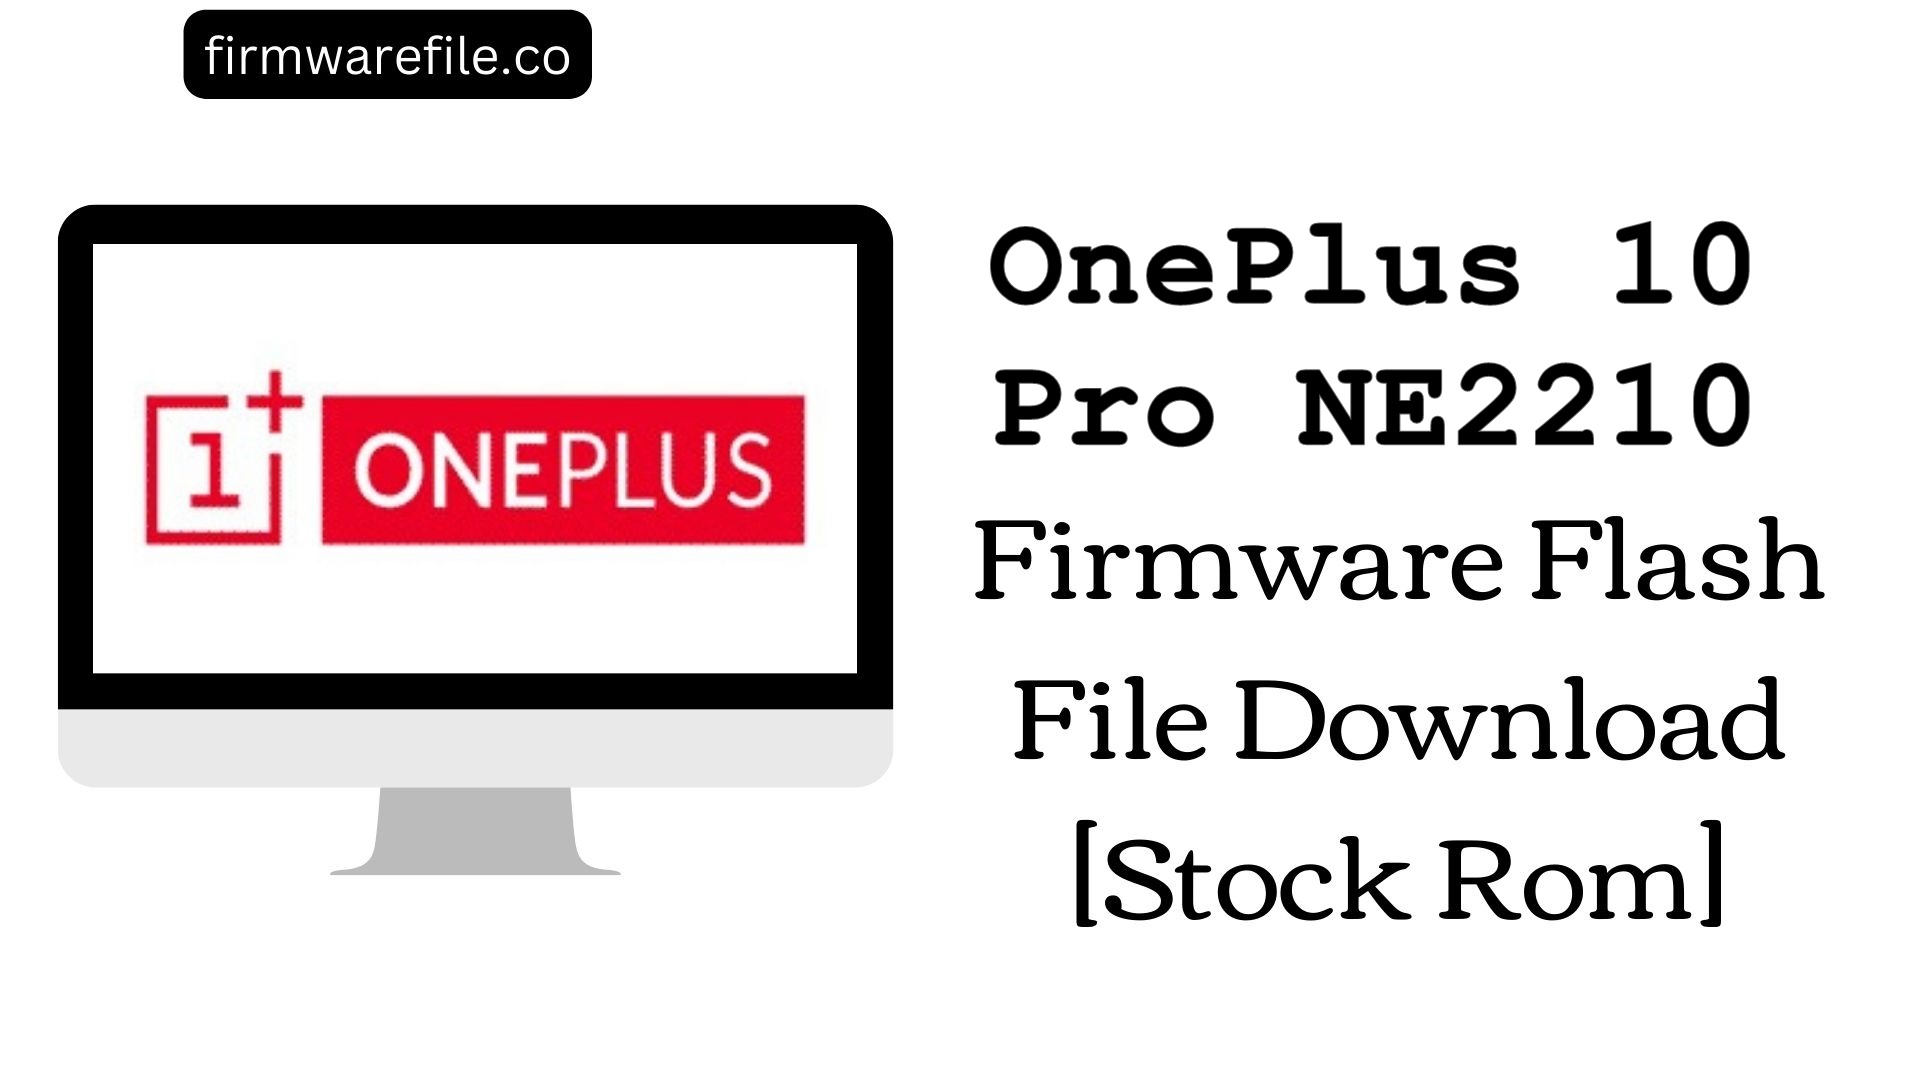 OnePlus 10 Pro NE2210